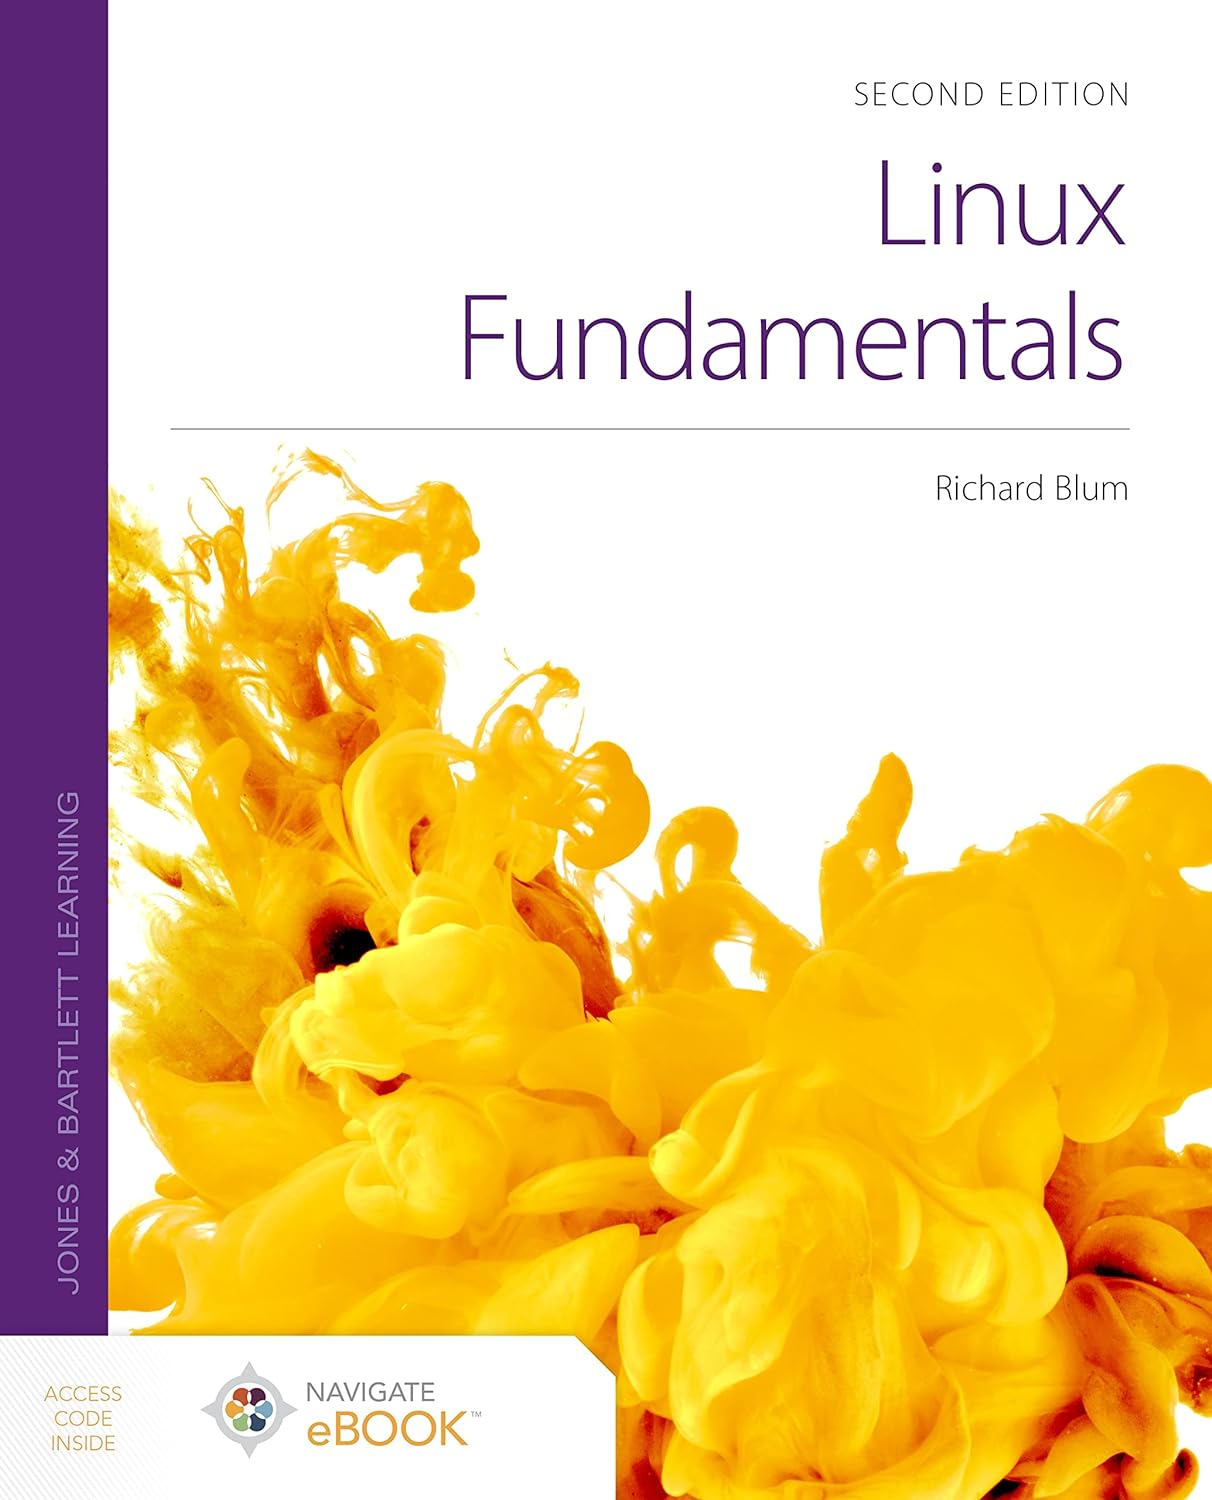 Linux Fundamentals 2nd Edition by Richard Blum